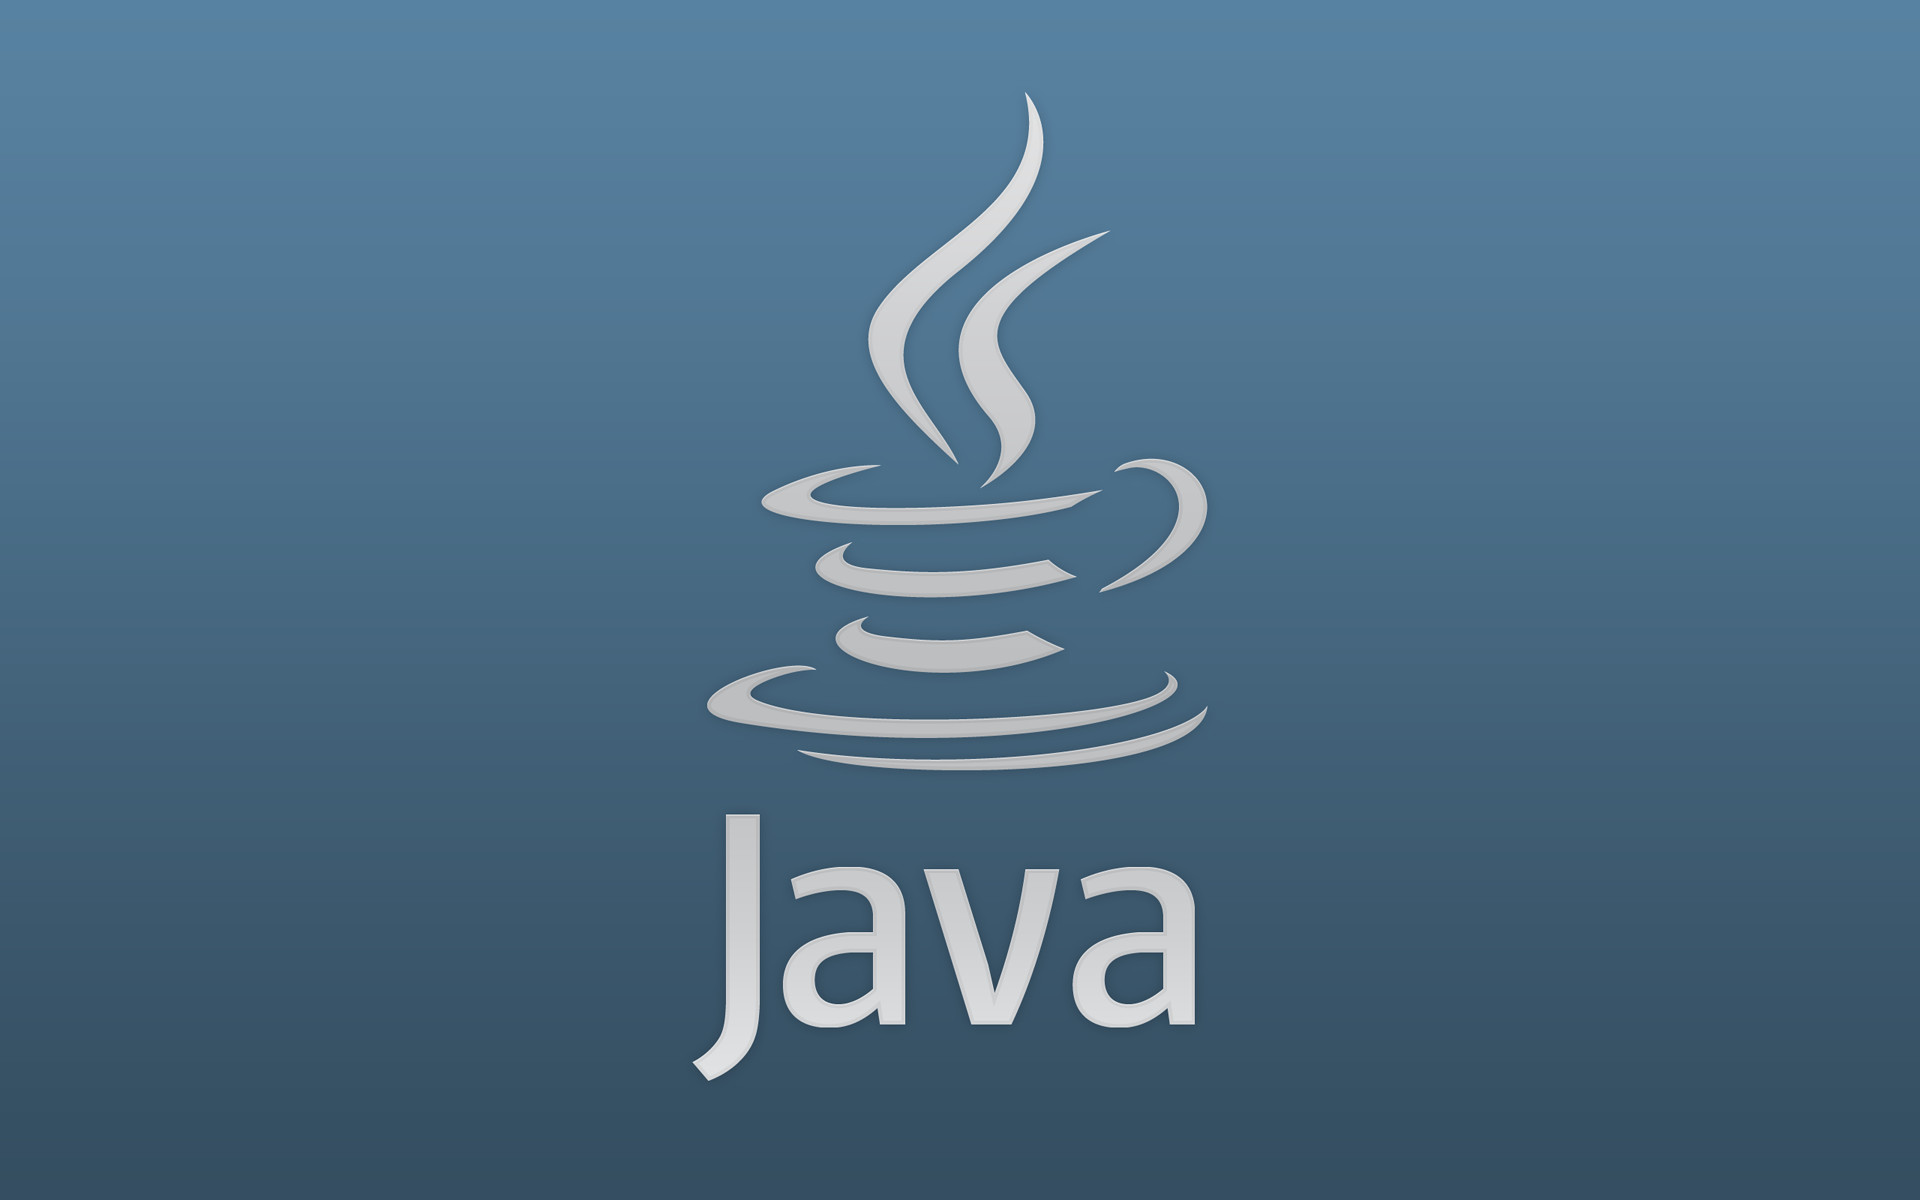 Java Wallpaper